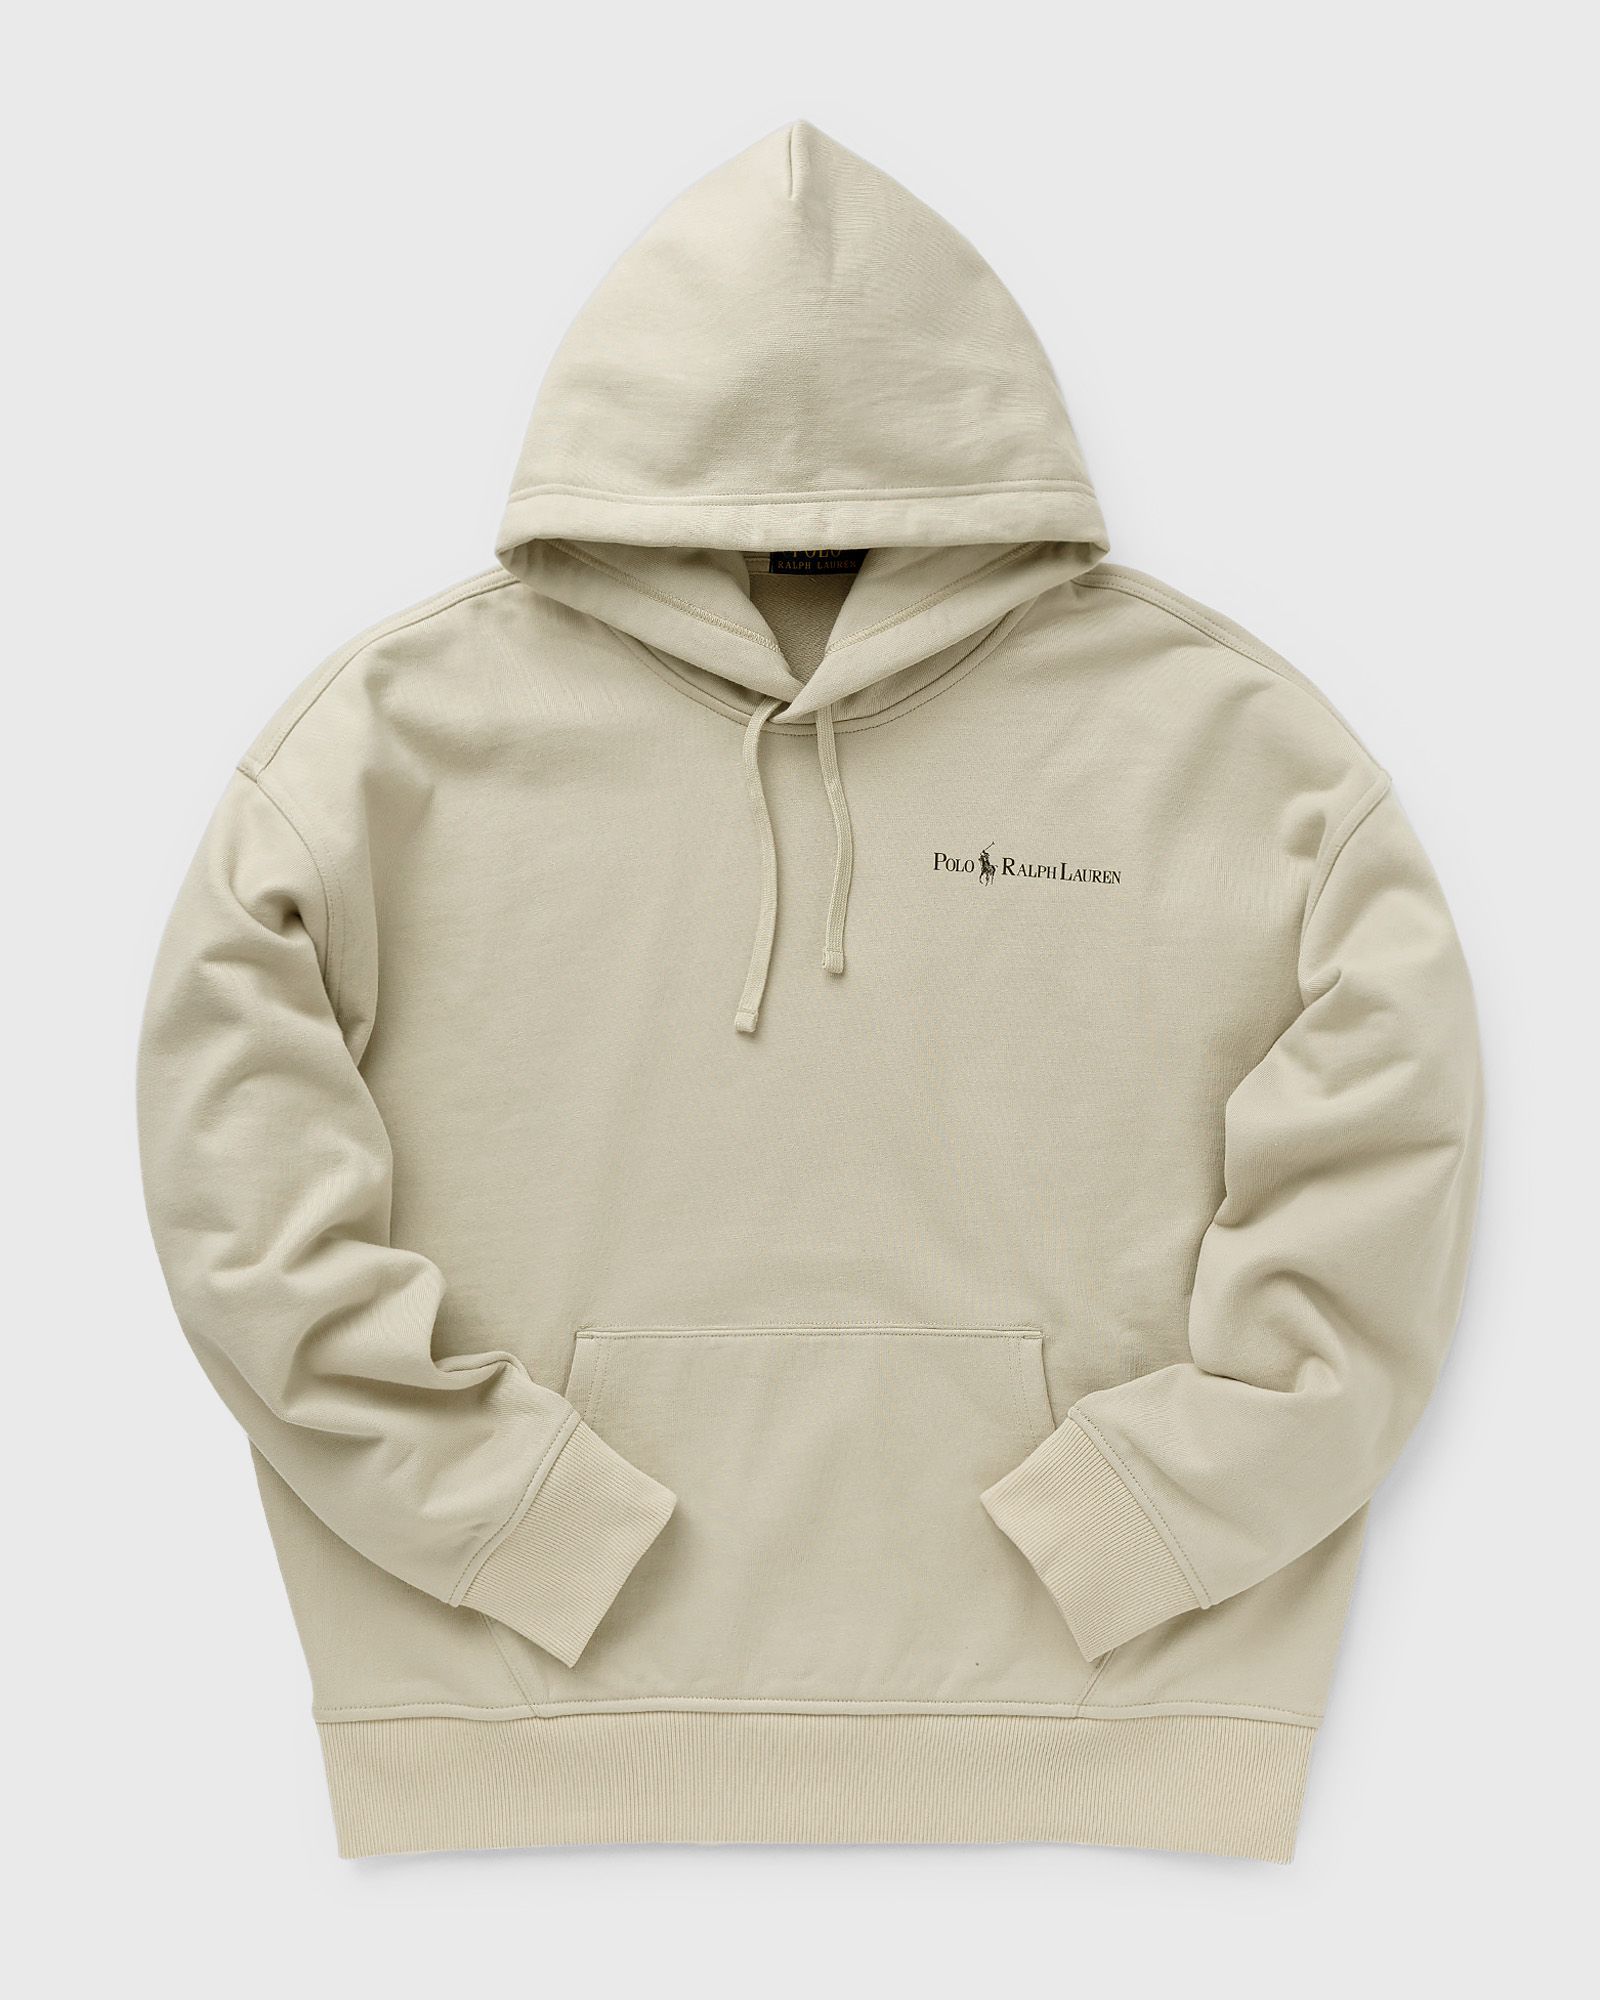 Polo Ralph Lauren - lspohoodm1-long sleeve-sweatshirt men hoodies beige in größe:xxl